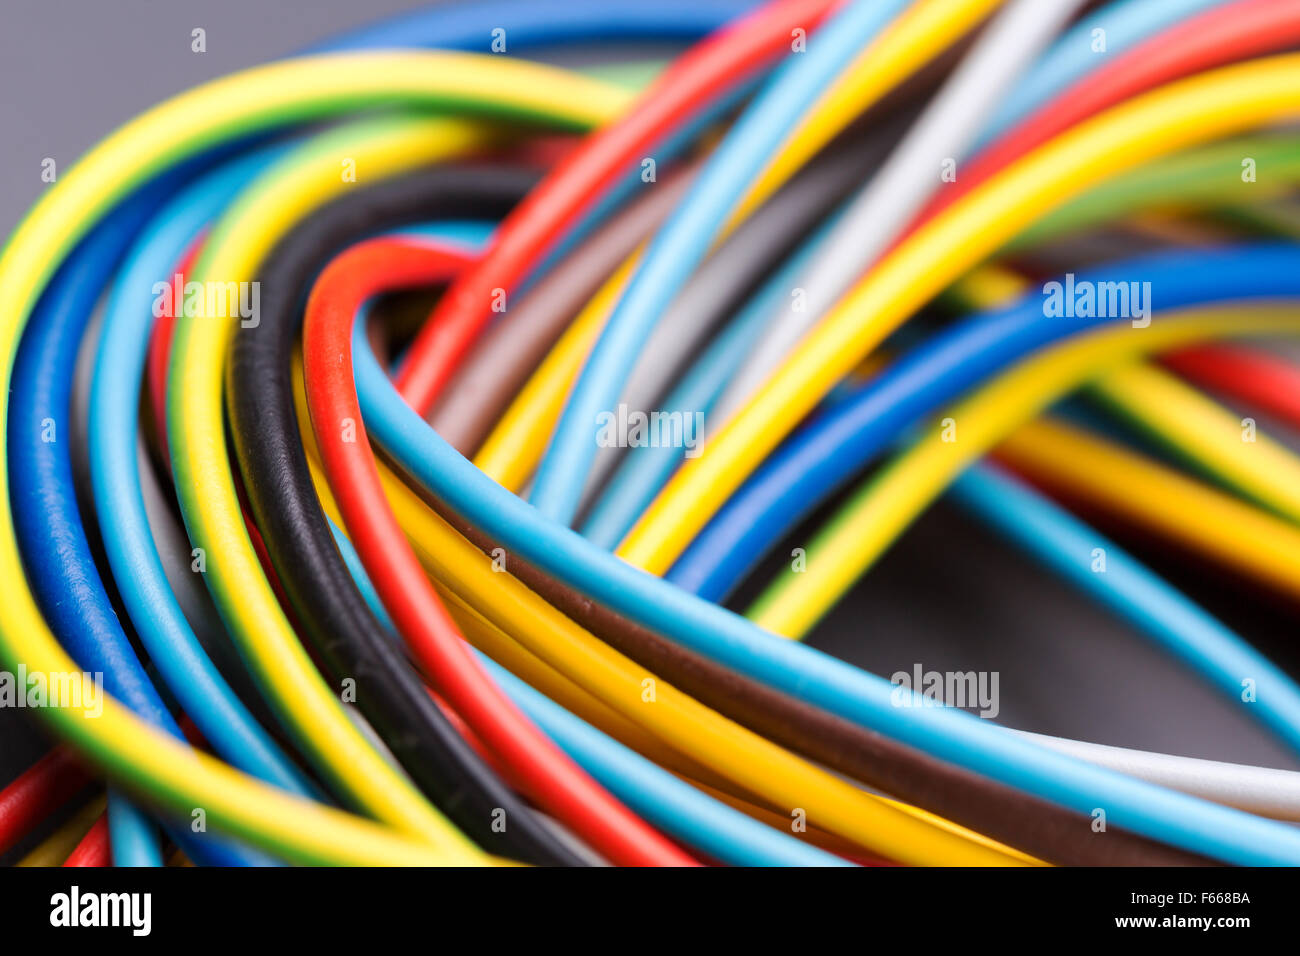 Buntes elektrische Energie Kabel Nahaufnahme Bild Stockfoto